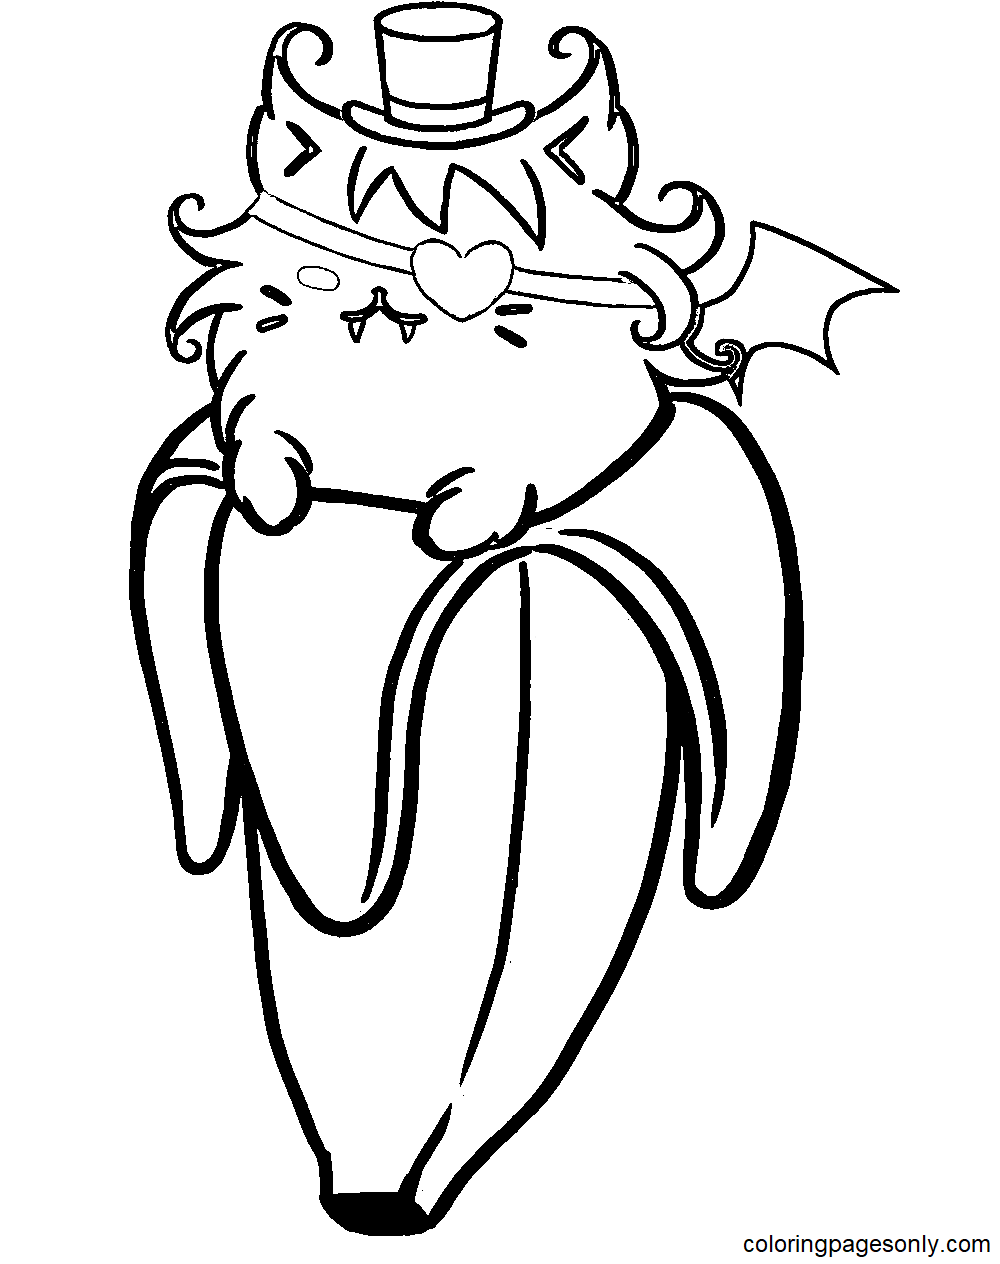 Vampiro Bananya from Bananya